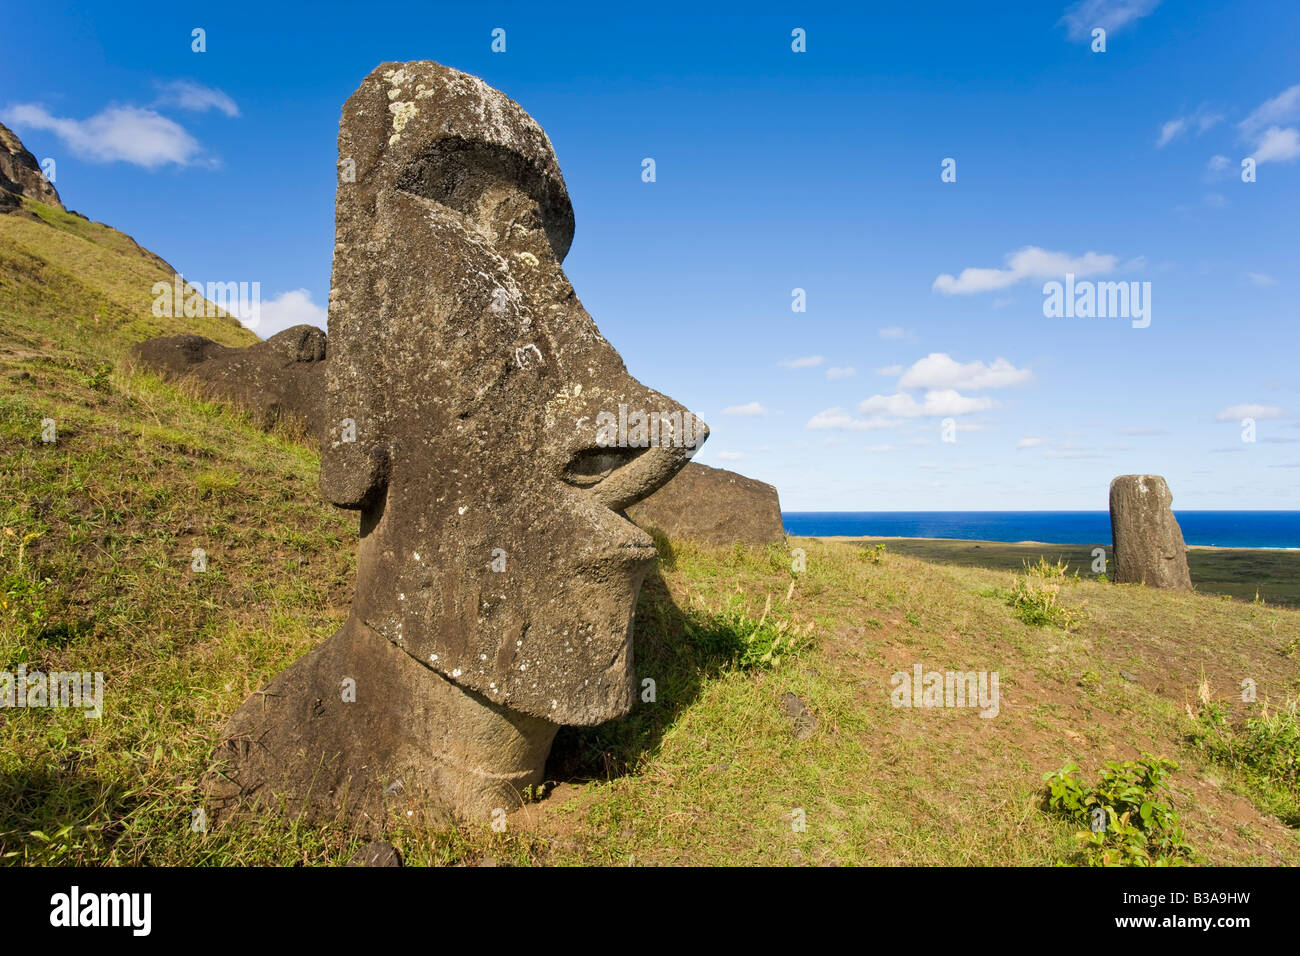 Chile, Rapa Nui, Easter Island, giant monolithic stone Maoi statues at Rano Raraku Stock Photo